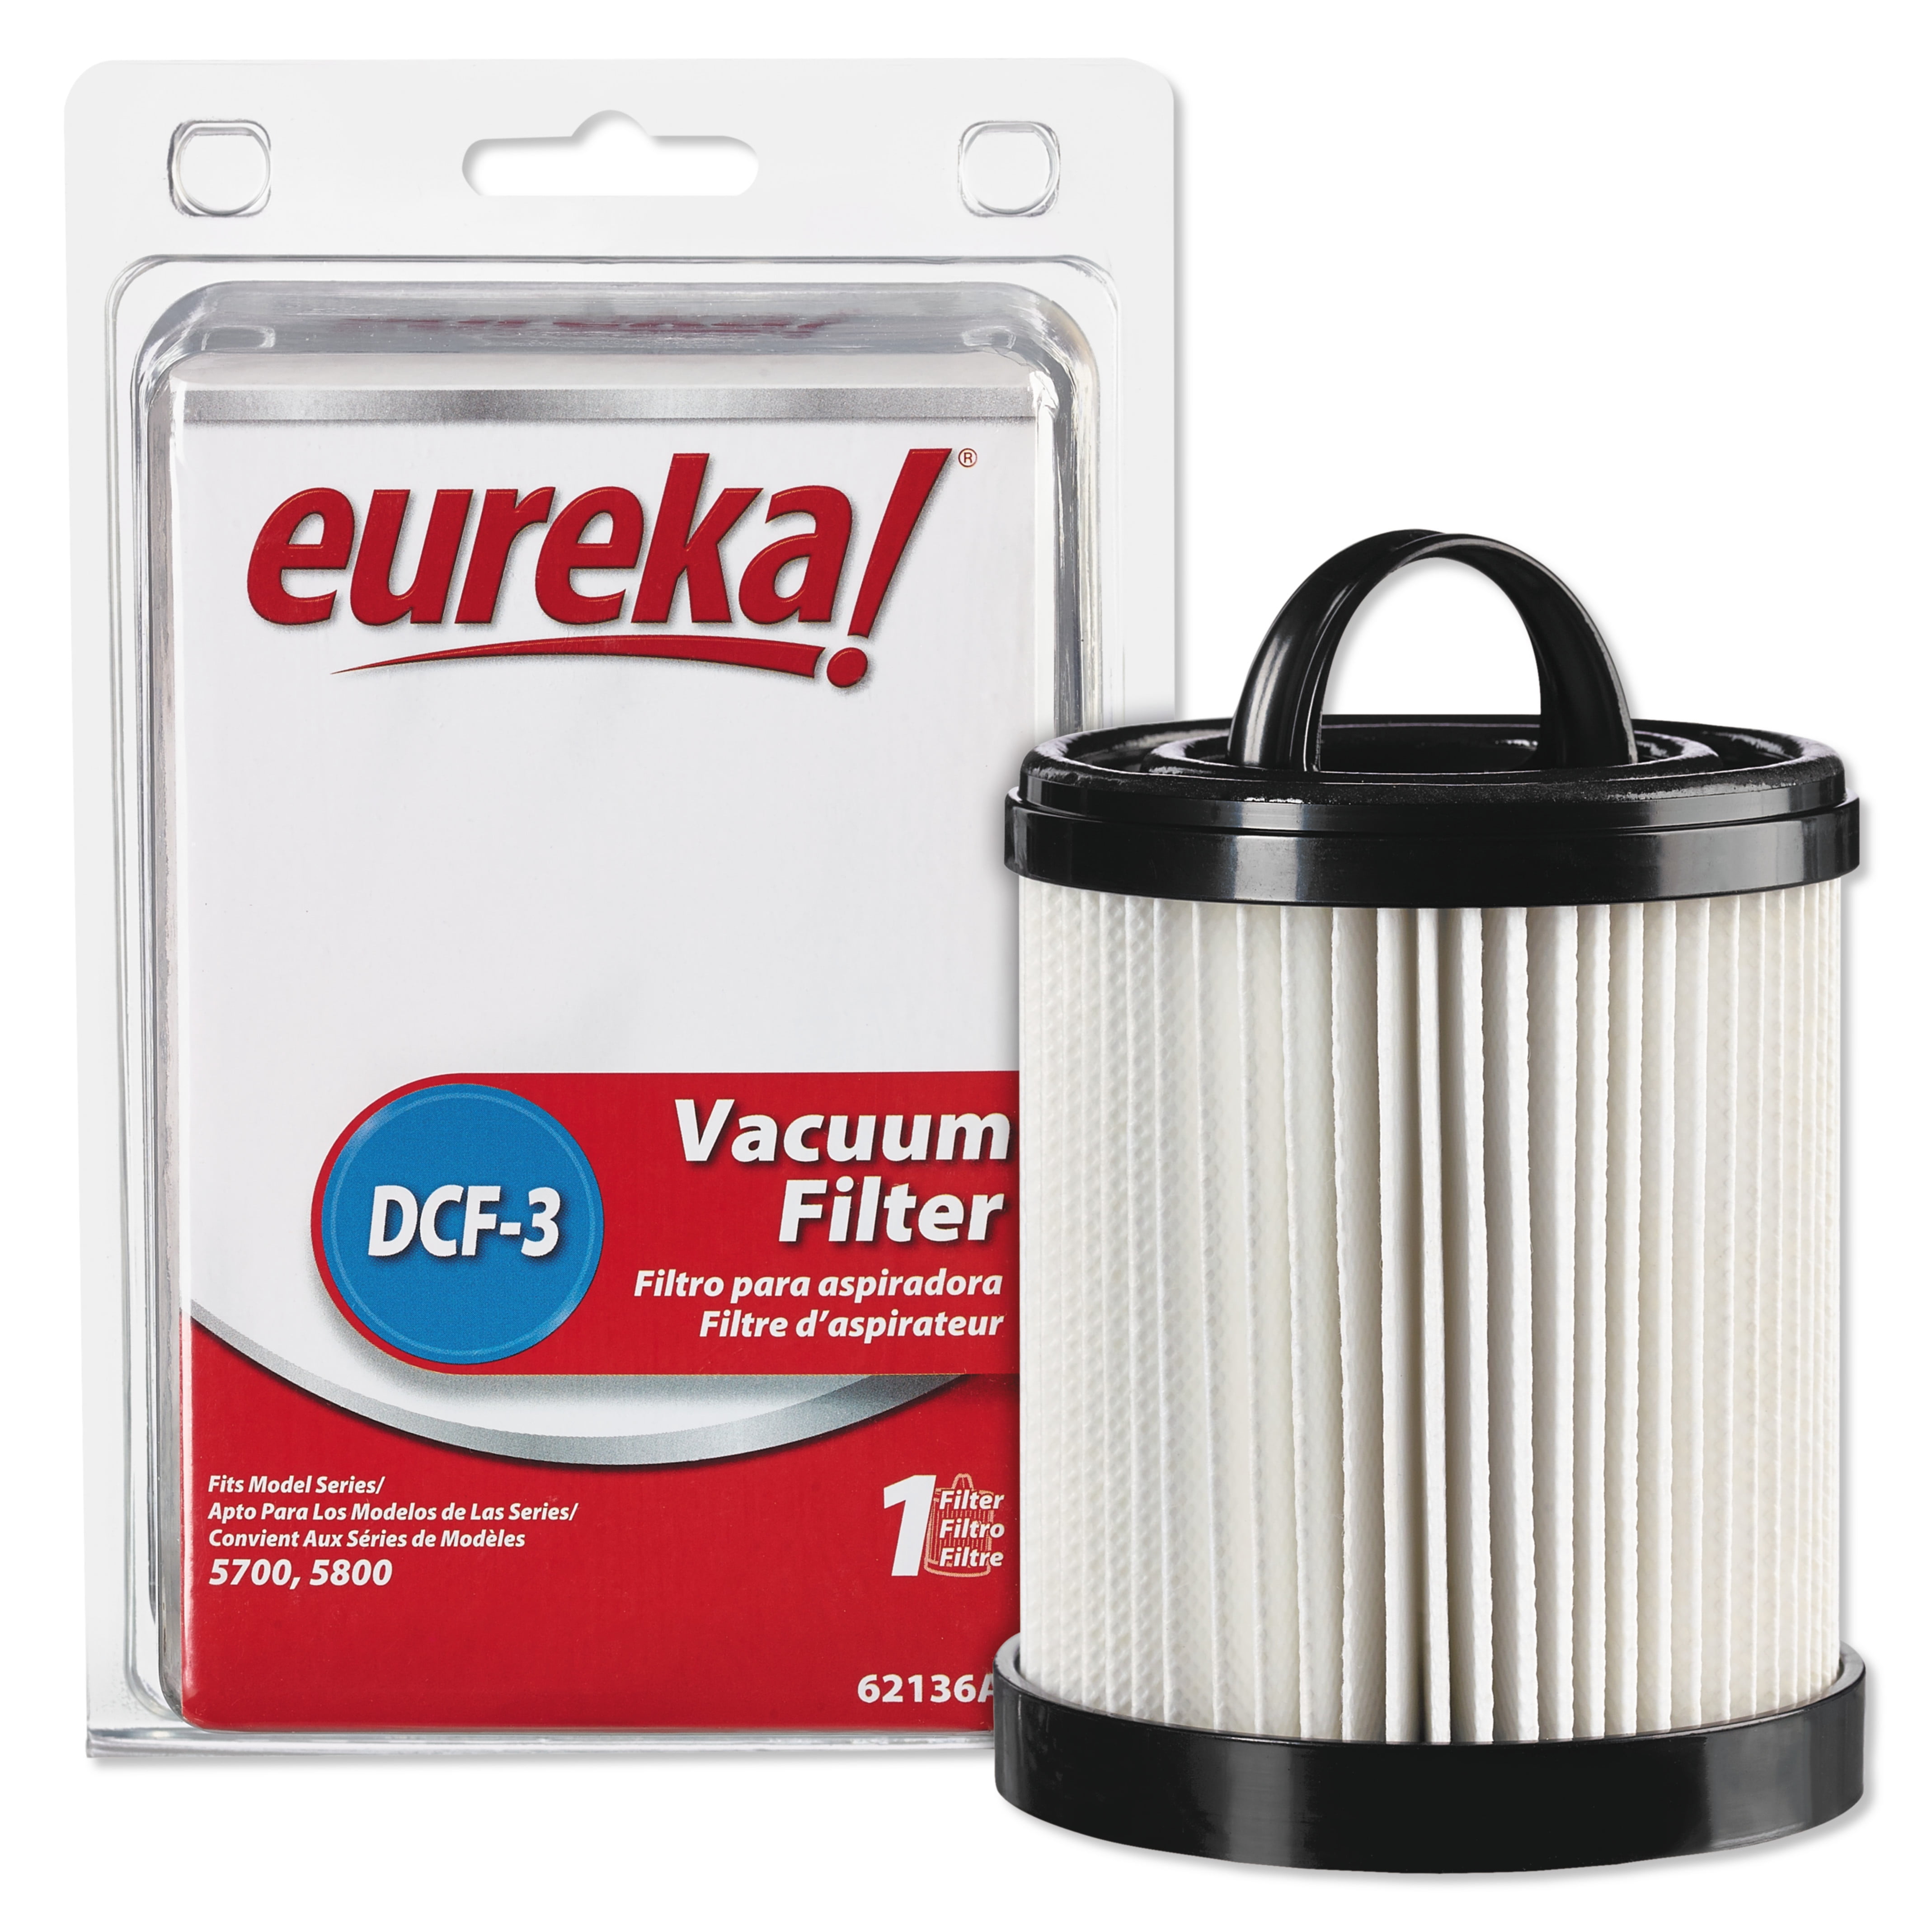 3M Filtrete Vacuum Filter for Eureka Style Dcf-21 Allergen 1 PK for sale online 